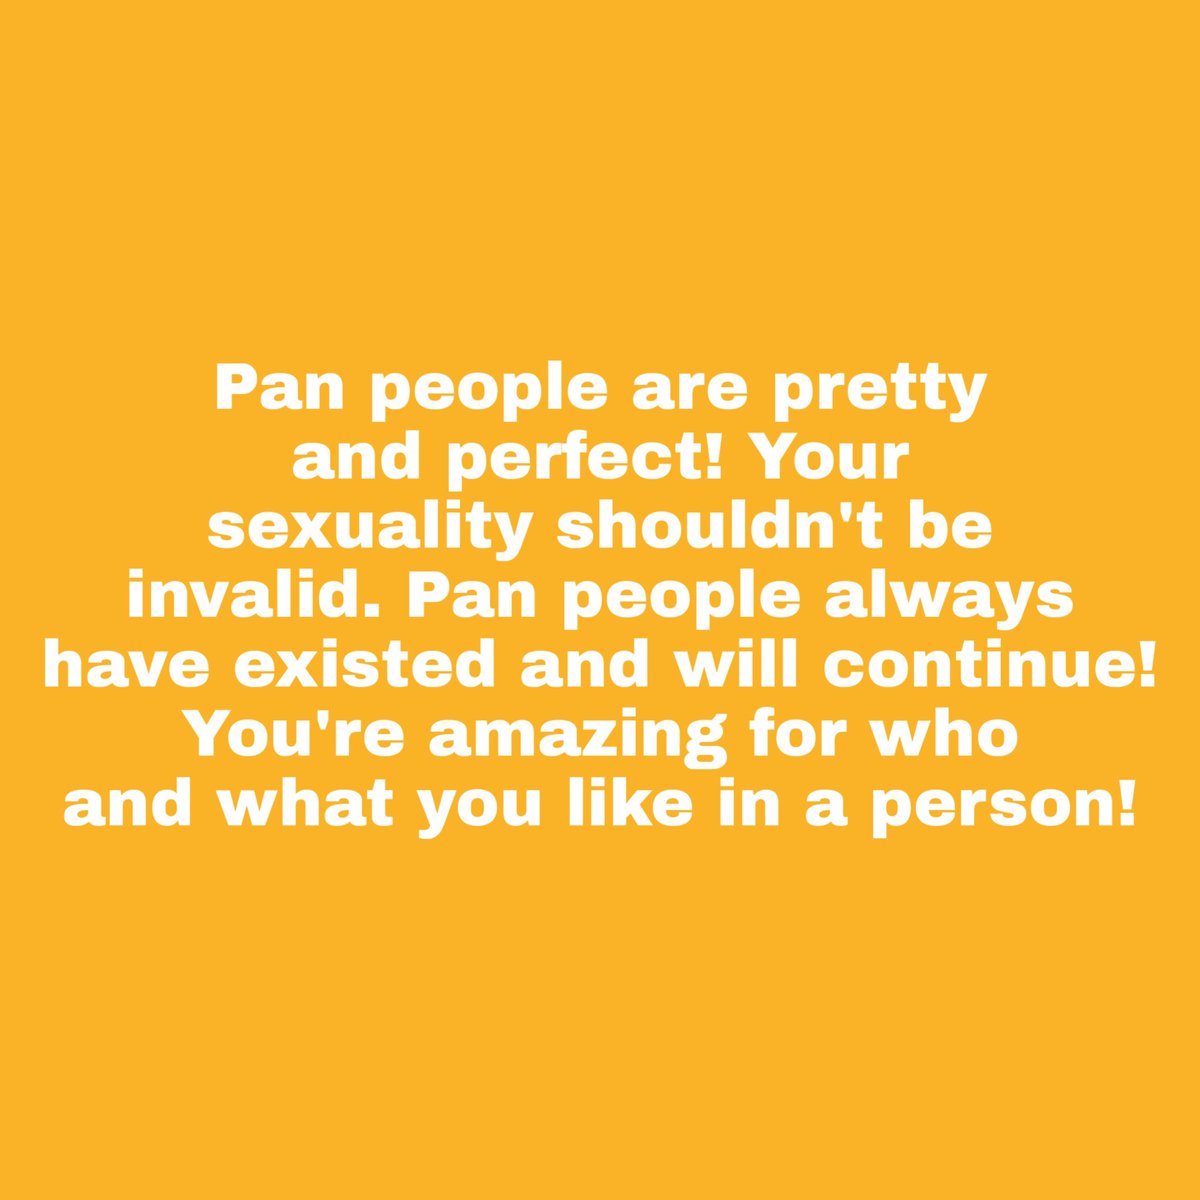  #UI: Pan people are Beautiful~~